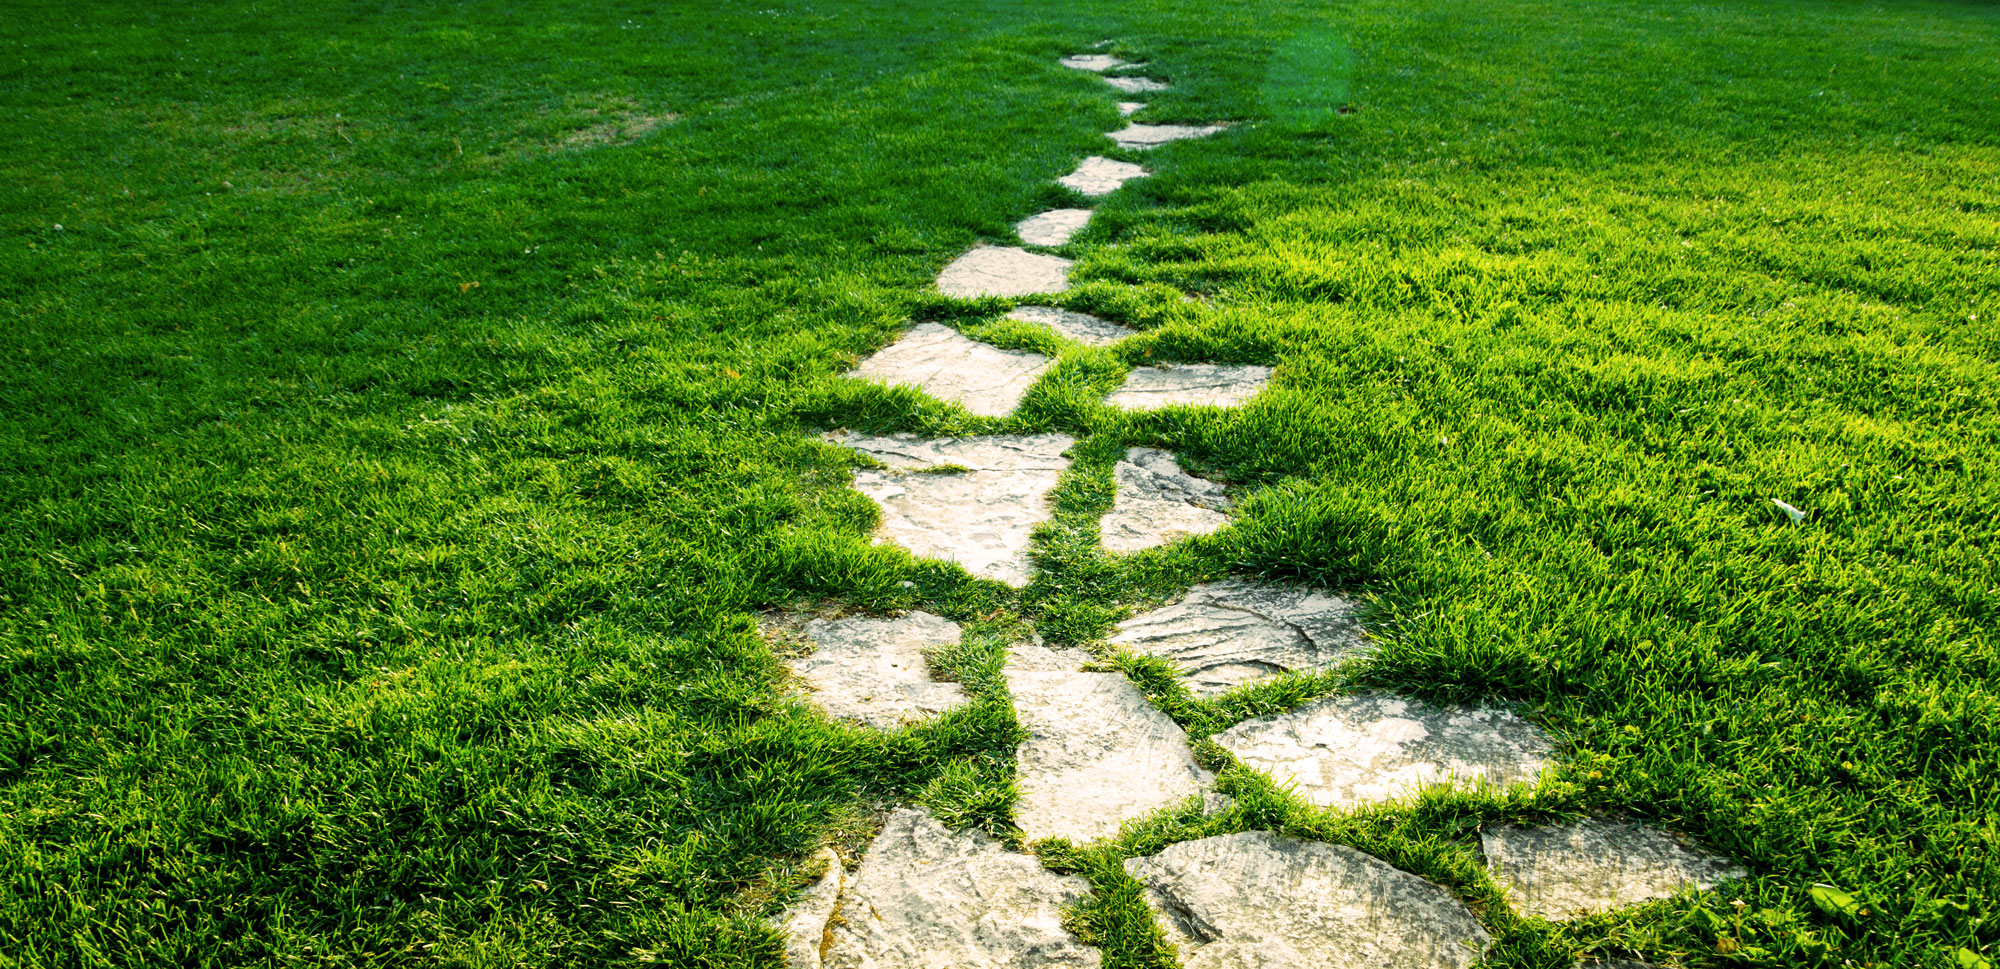 stepping stone path through grass